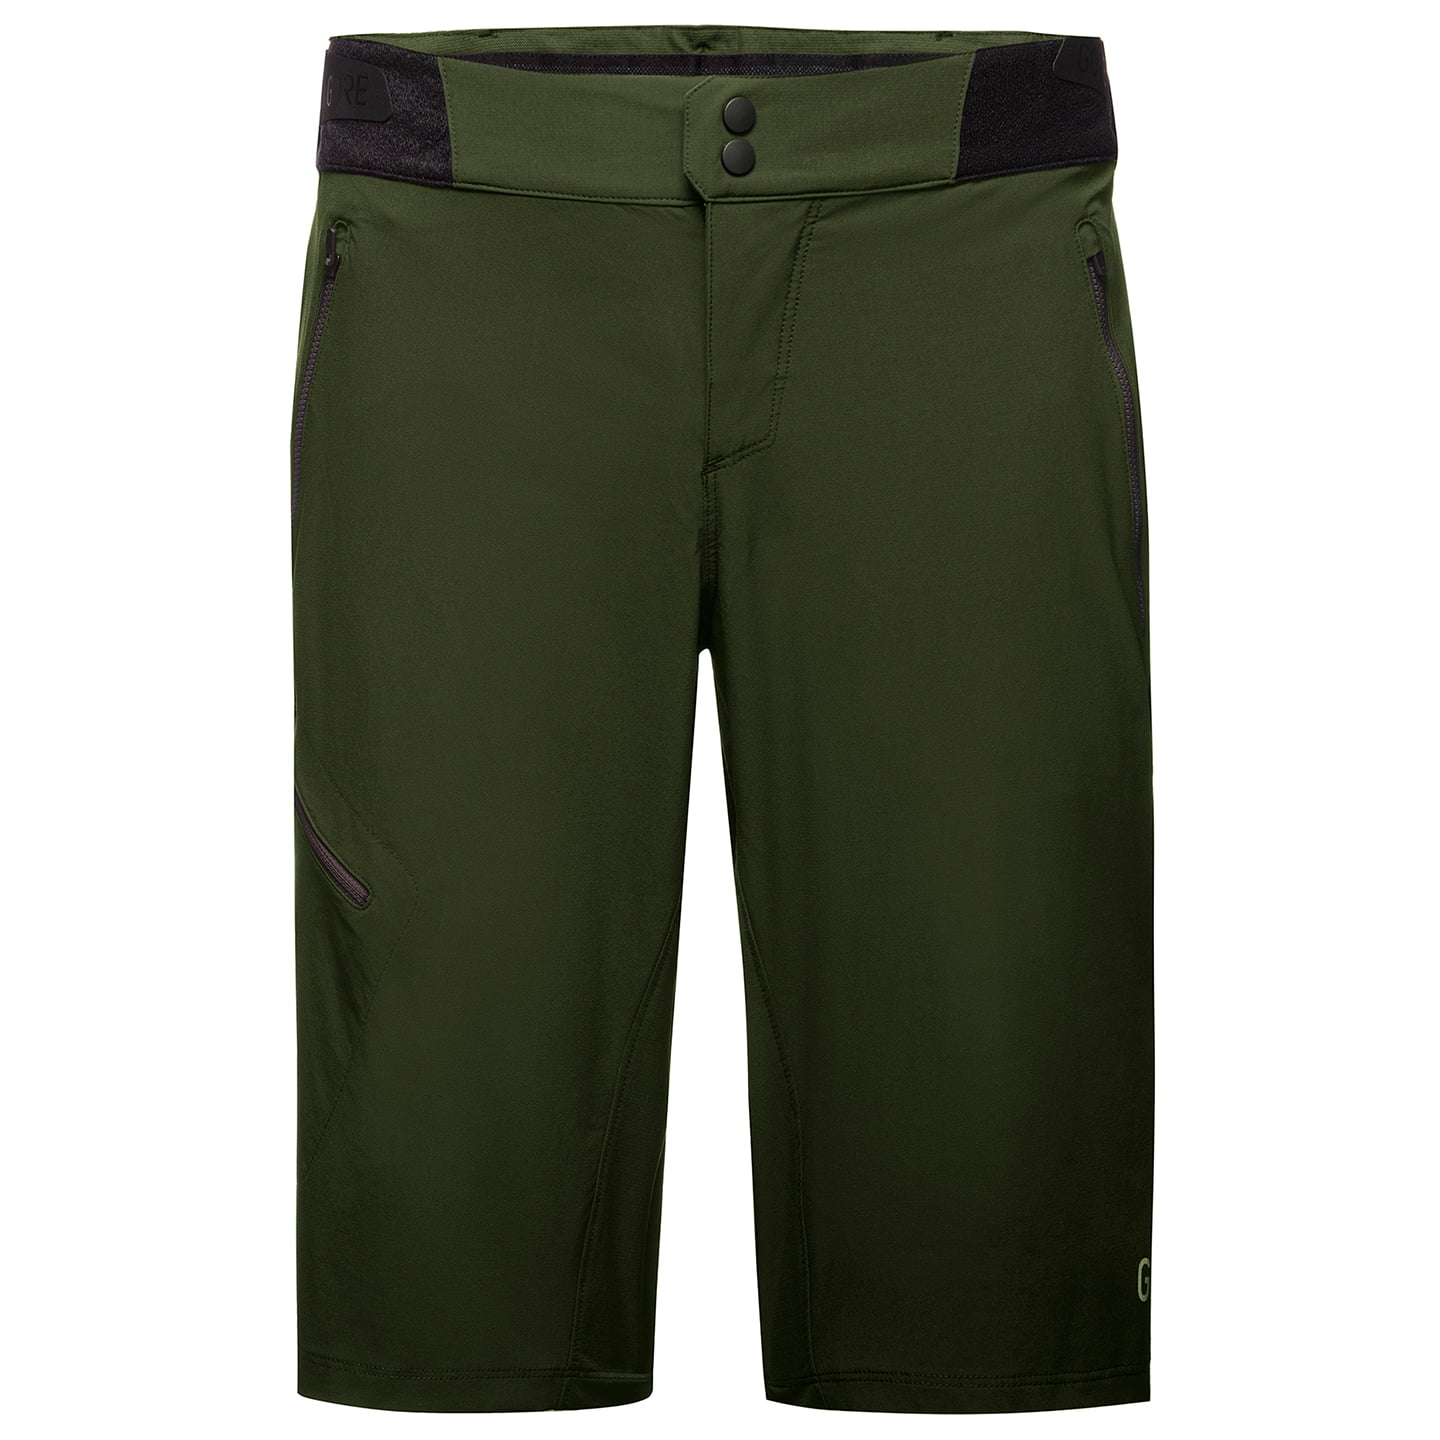 GORE WEAR C5 w/o Pad Bike Shorts, for men, size L, MTB shorts, MTB clothing